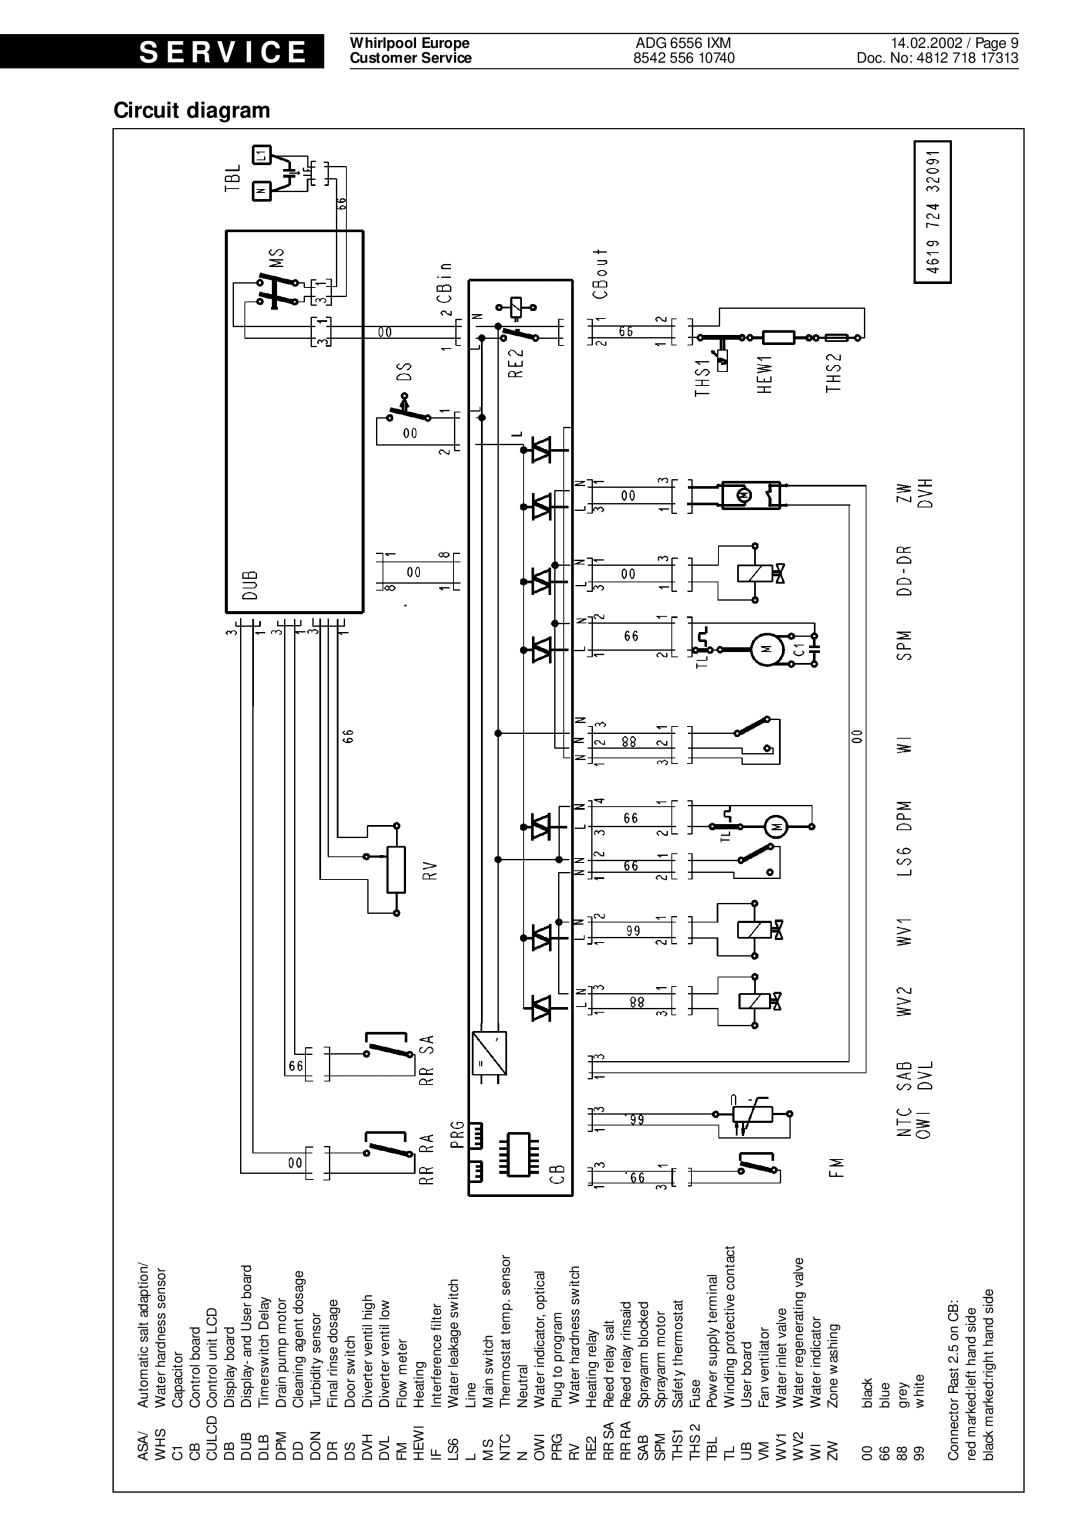 Whirlpool ADG 6556 IXM service manual Circuit, diagram, R V I C, Whirlpool Europe Customer Service 